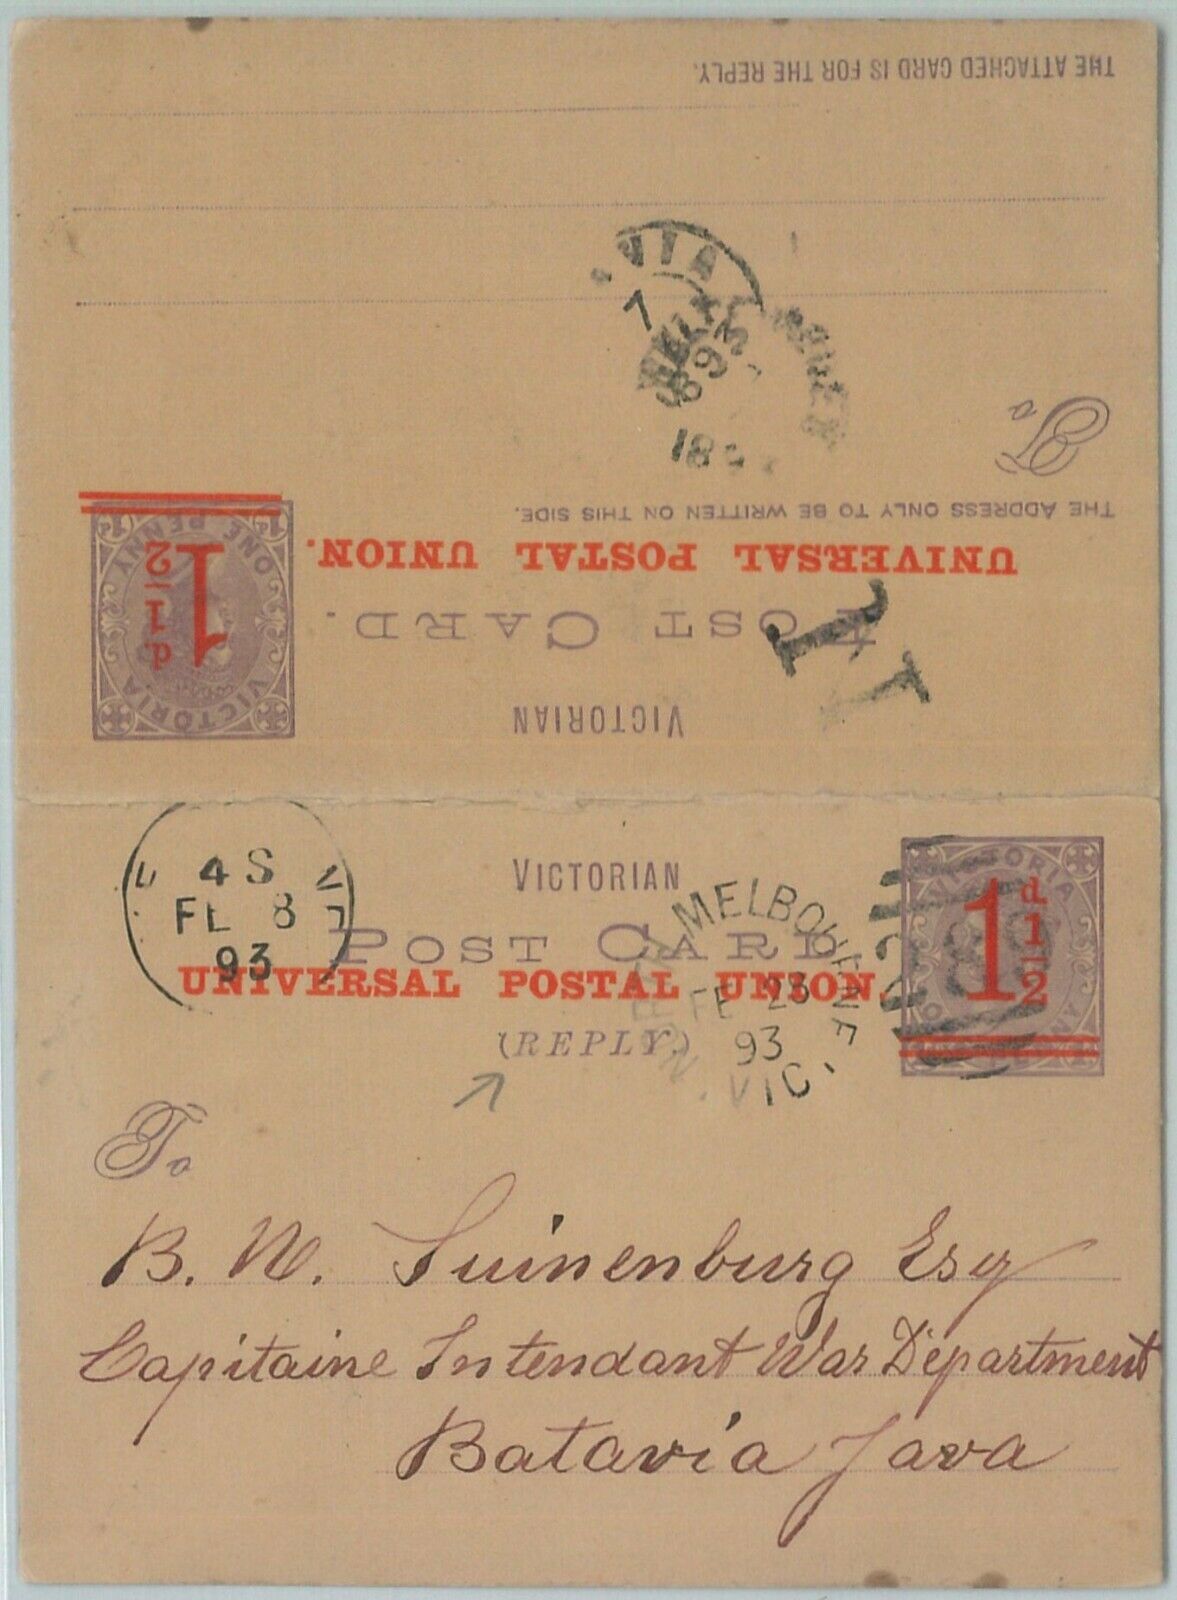 74112 - Postal History - Australia Victoria - Double Stationery Card - Hg # 13